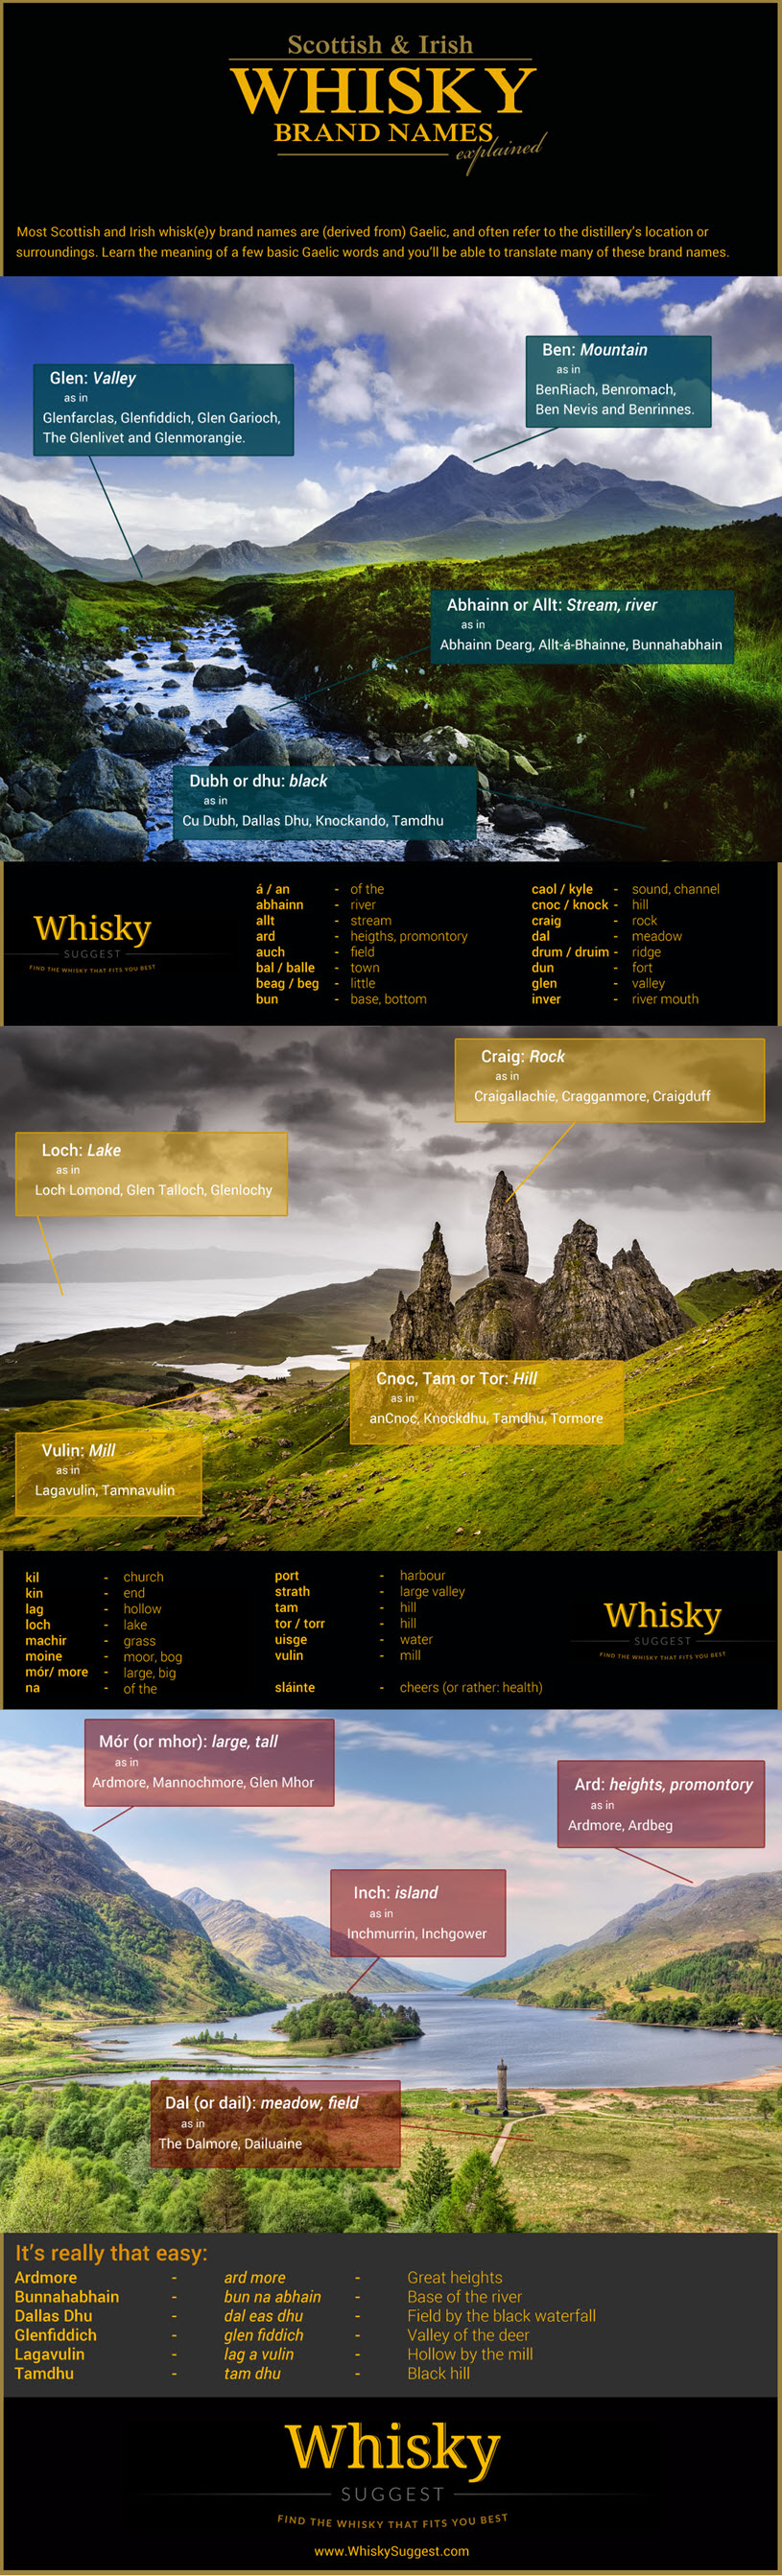 Scottish and Irish Whisky Brand Names Explained Infographic